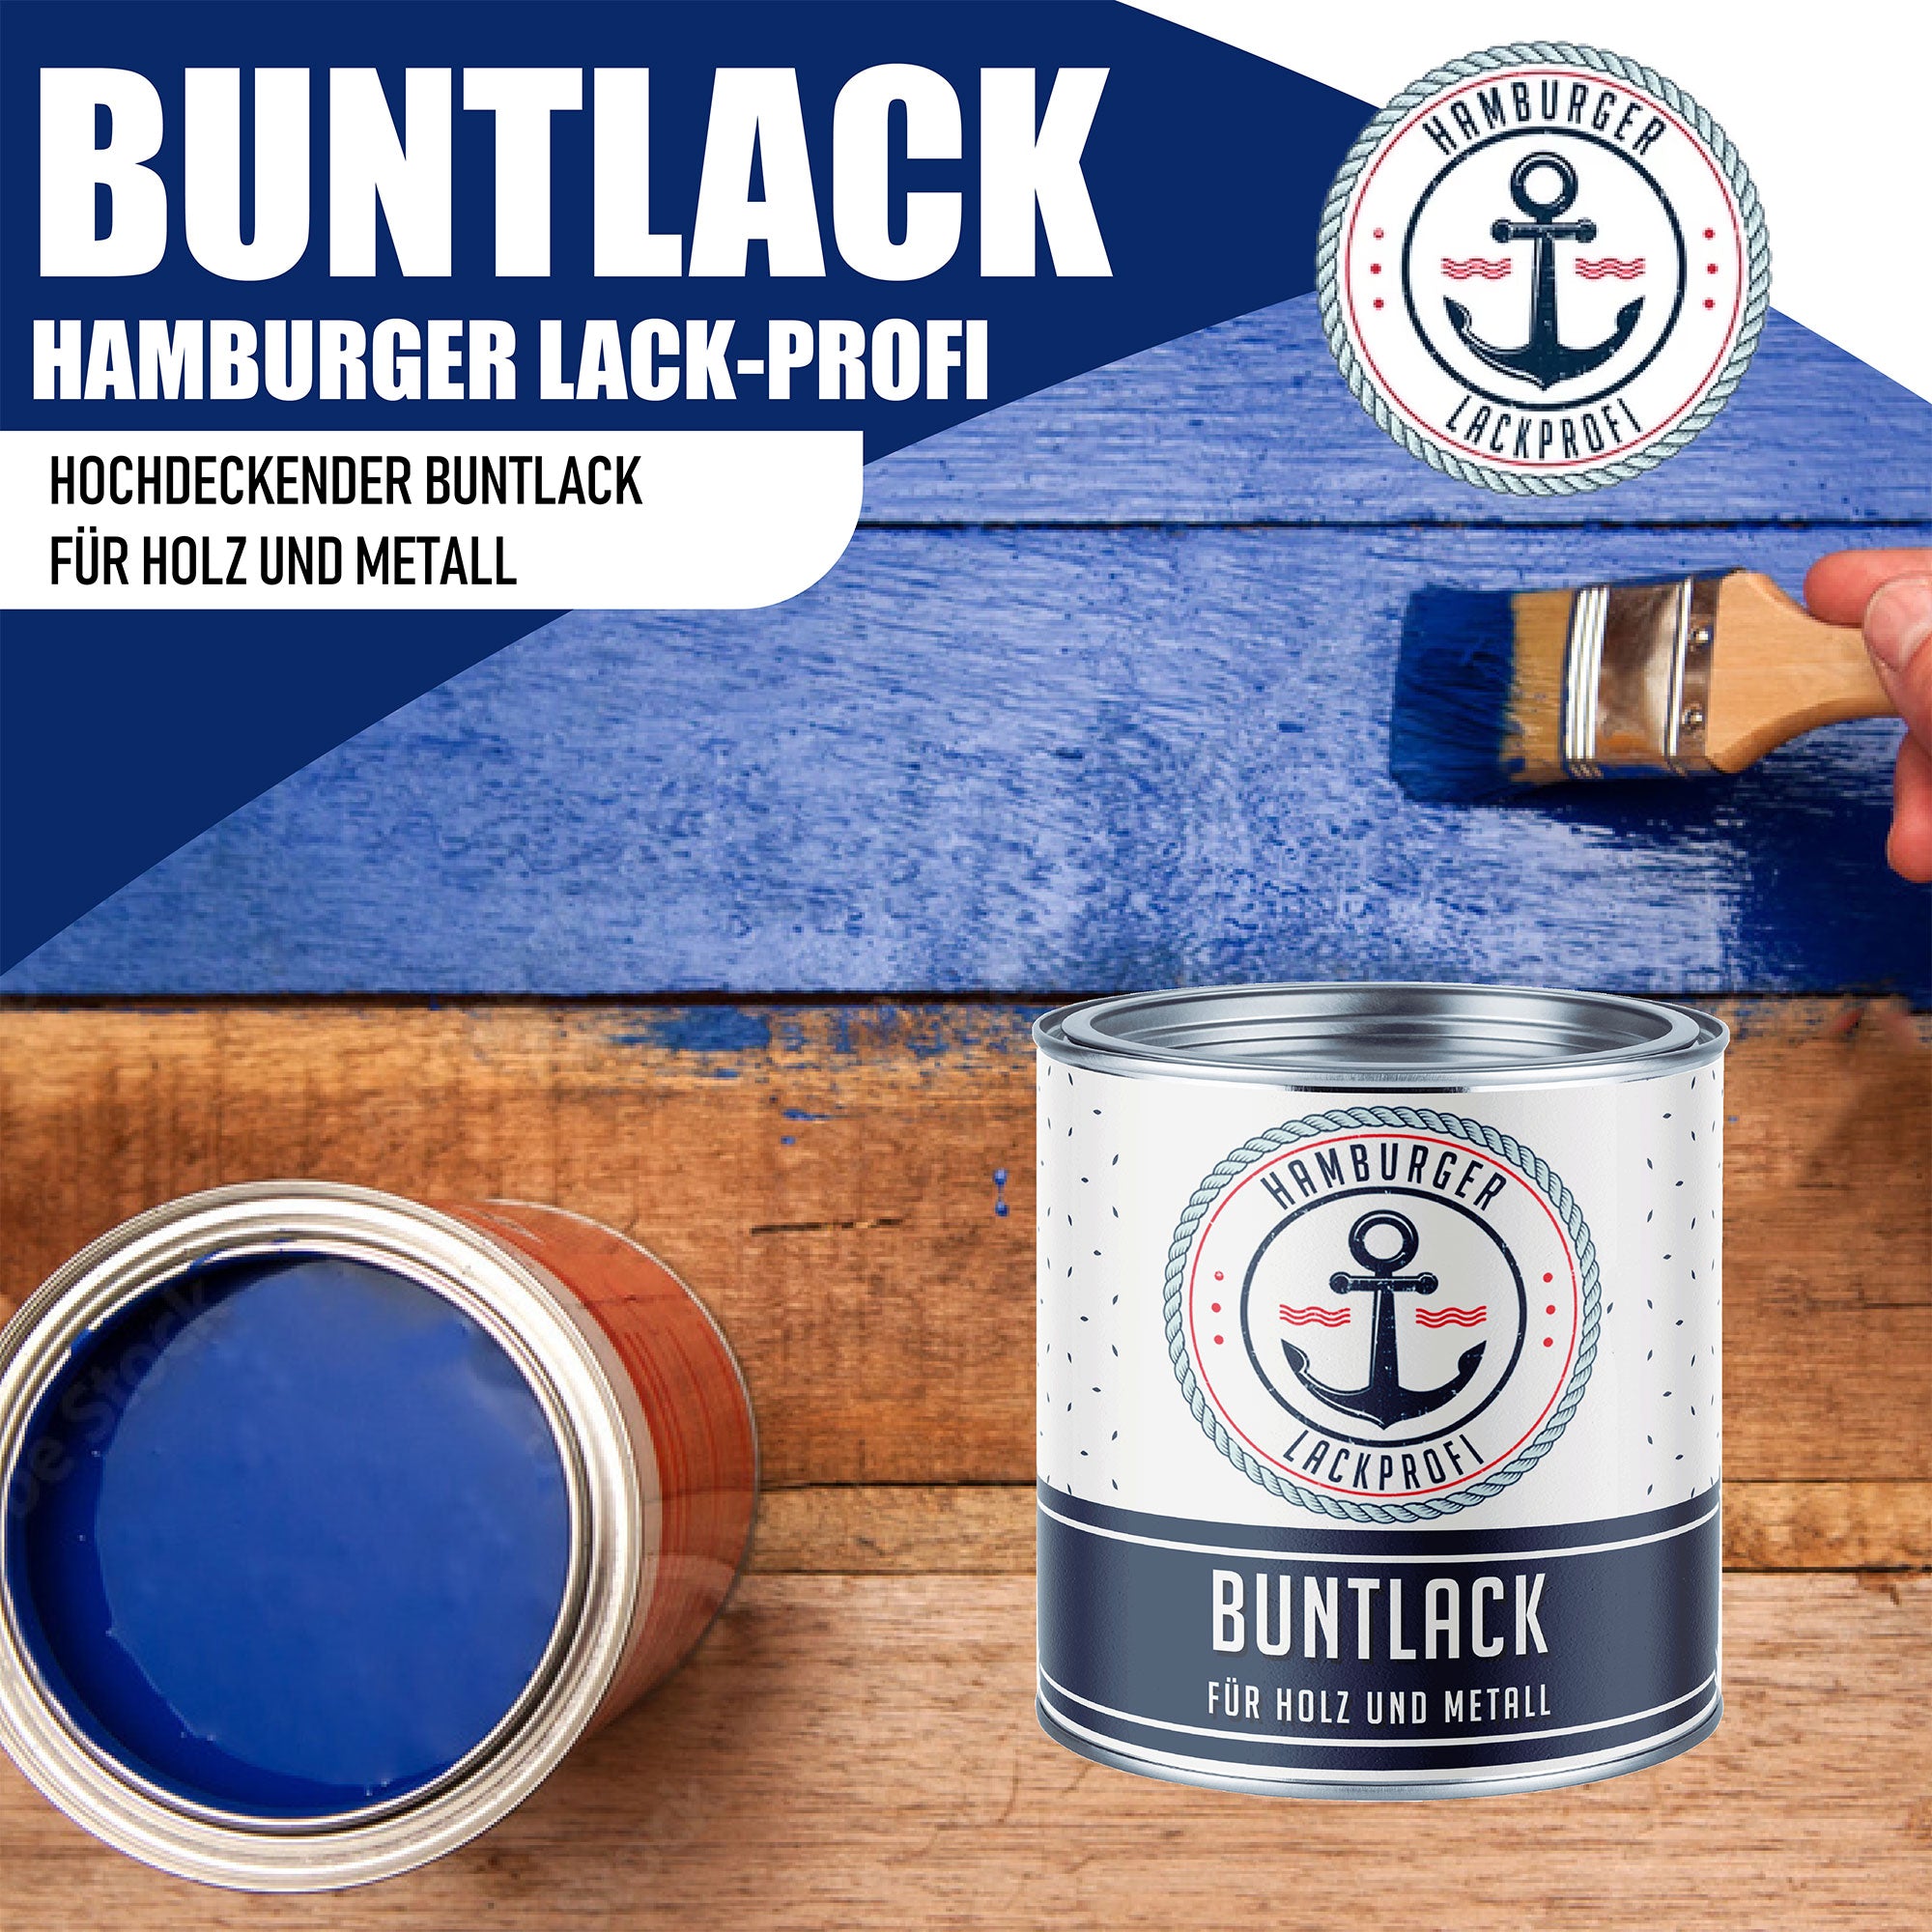 Hamburger Lack-Profi Buntlack Erdbeerrot RAL 3018 - Robuster Kunstharzlack